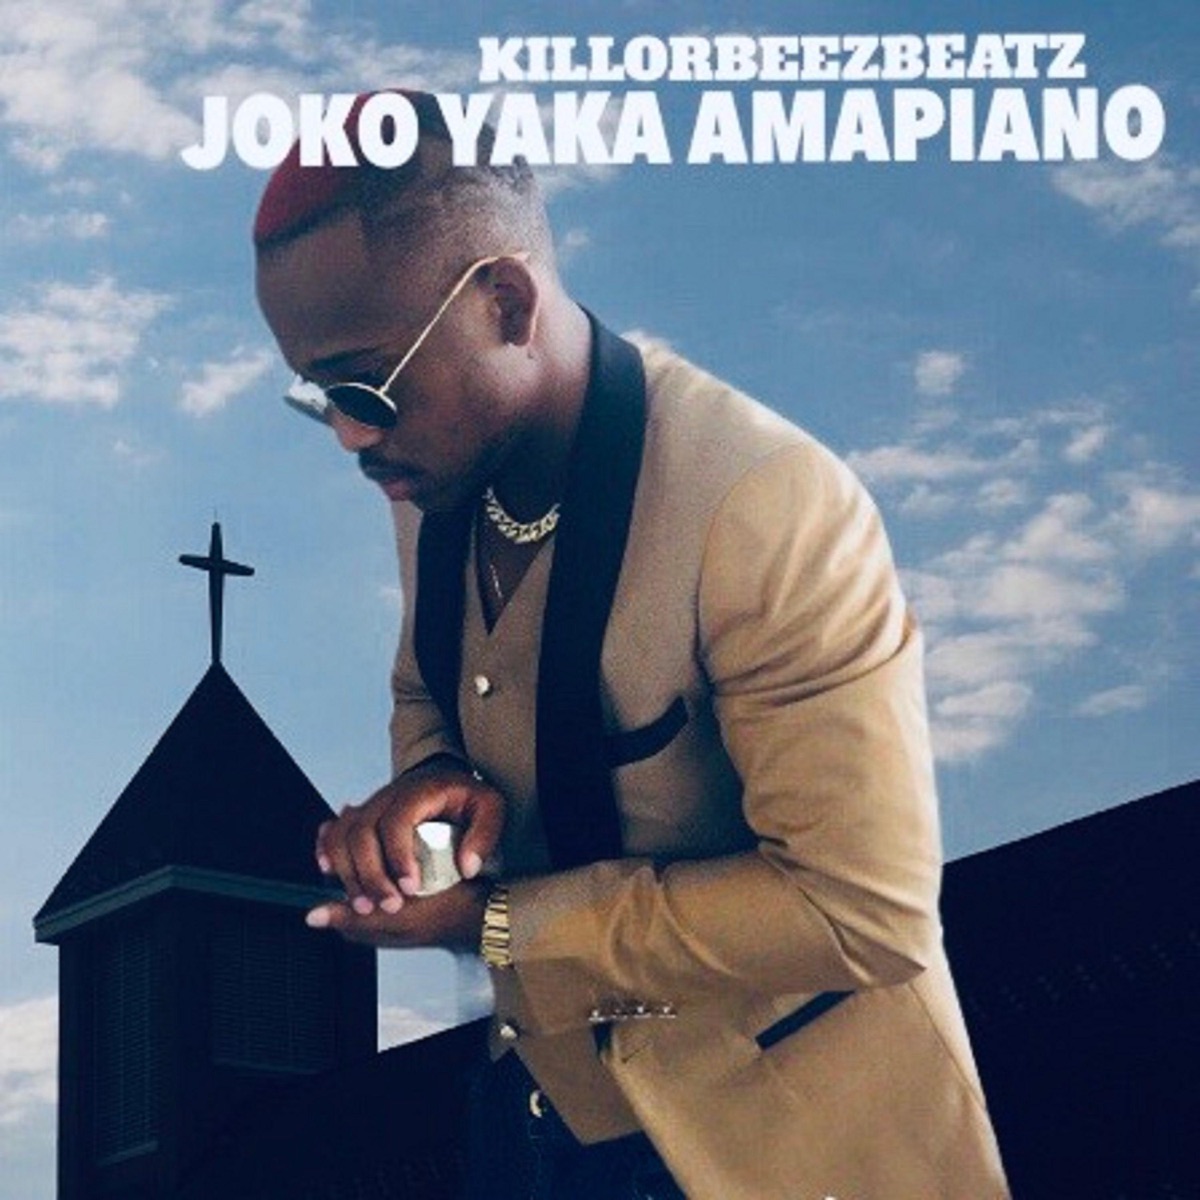 Joko Yaka Amapiano - Single - Album by Killorbeezbeatz - Apple Music